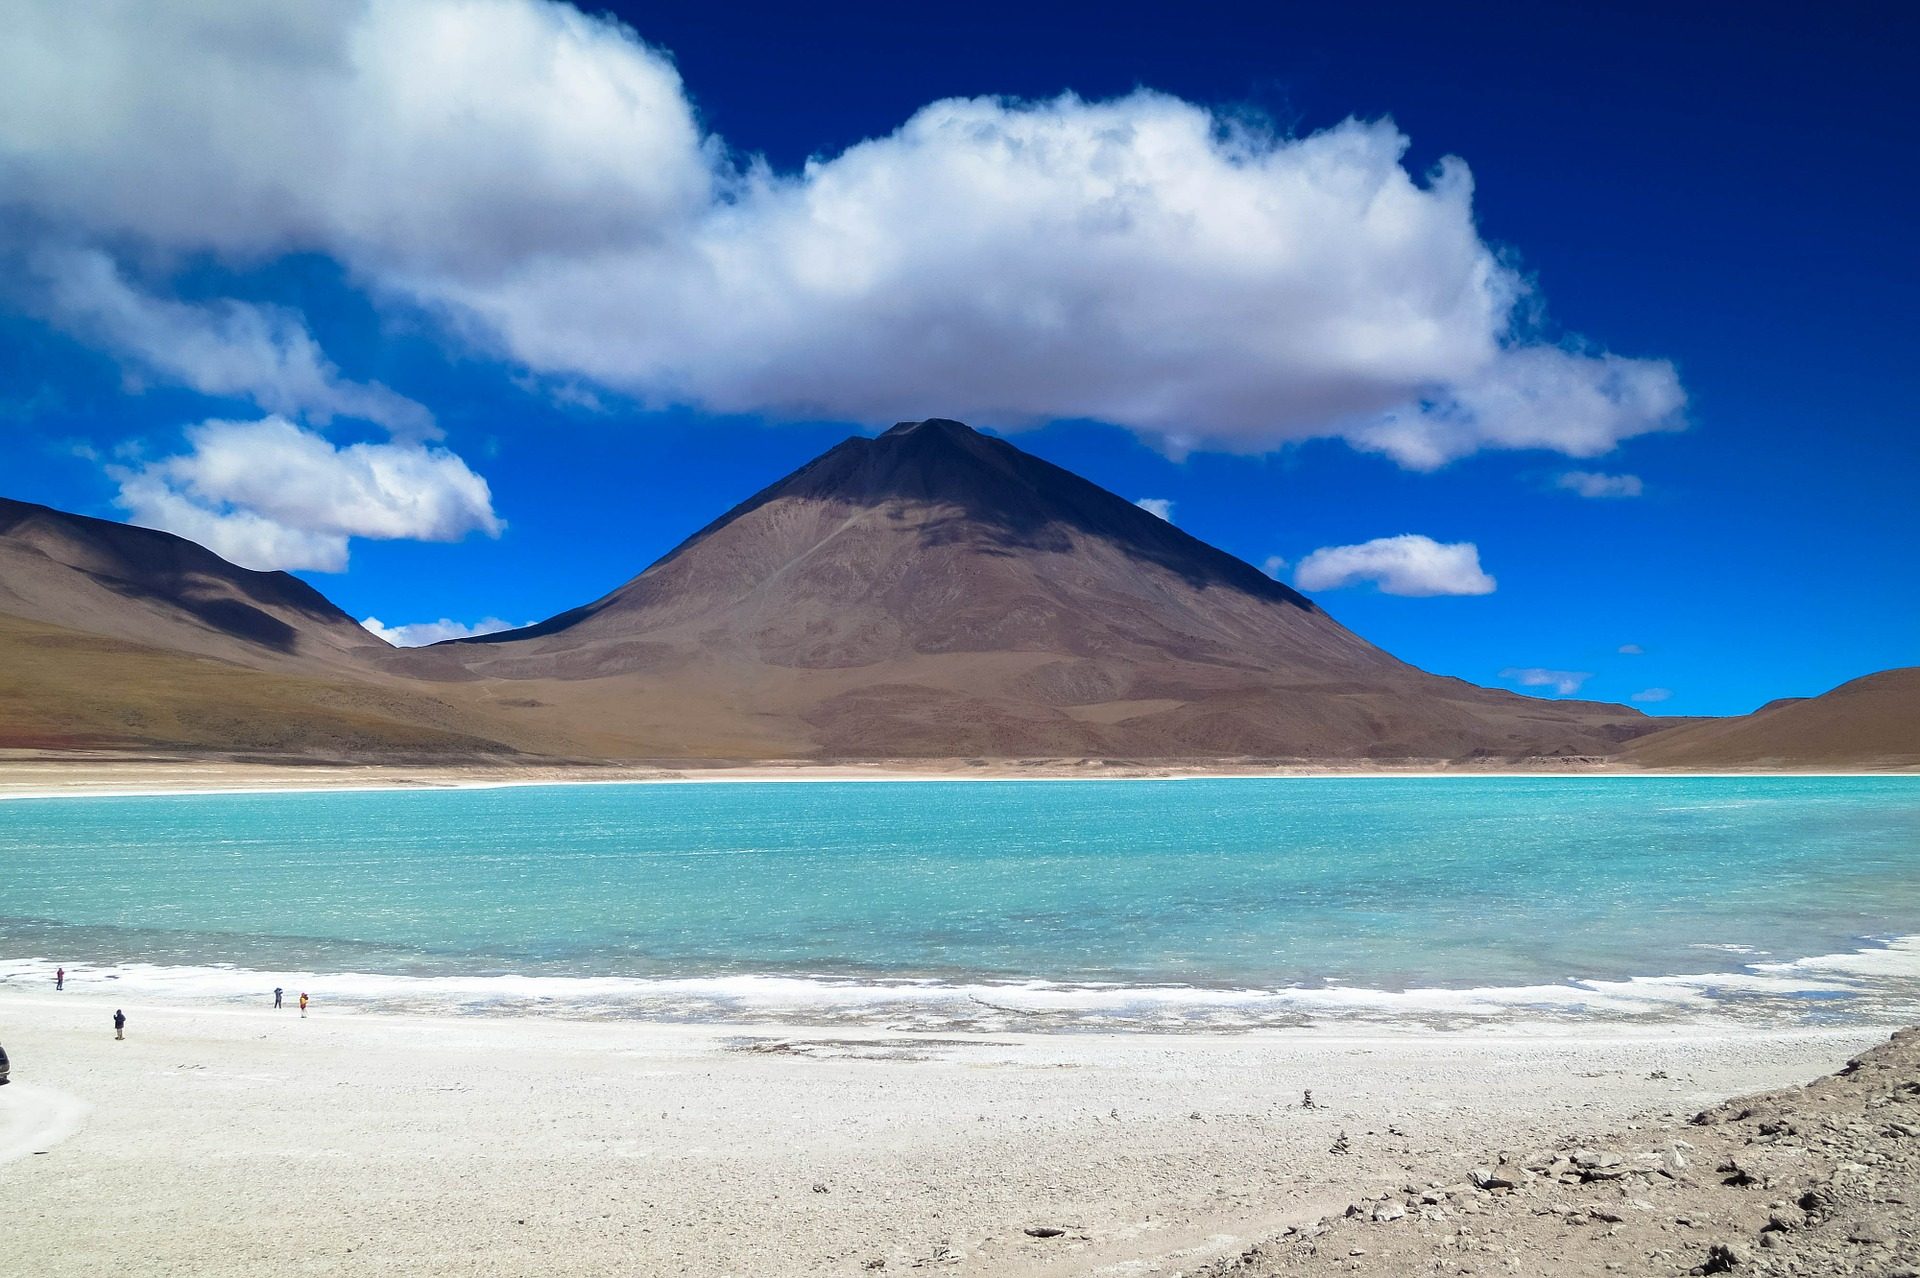 Volcano Salt Lake Atacama Desert, Chile-Bolivia-Argentina